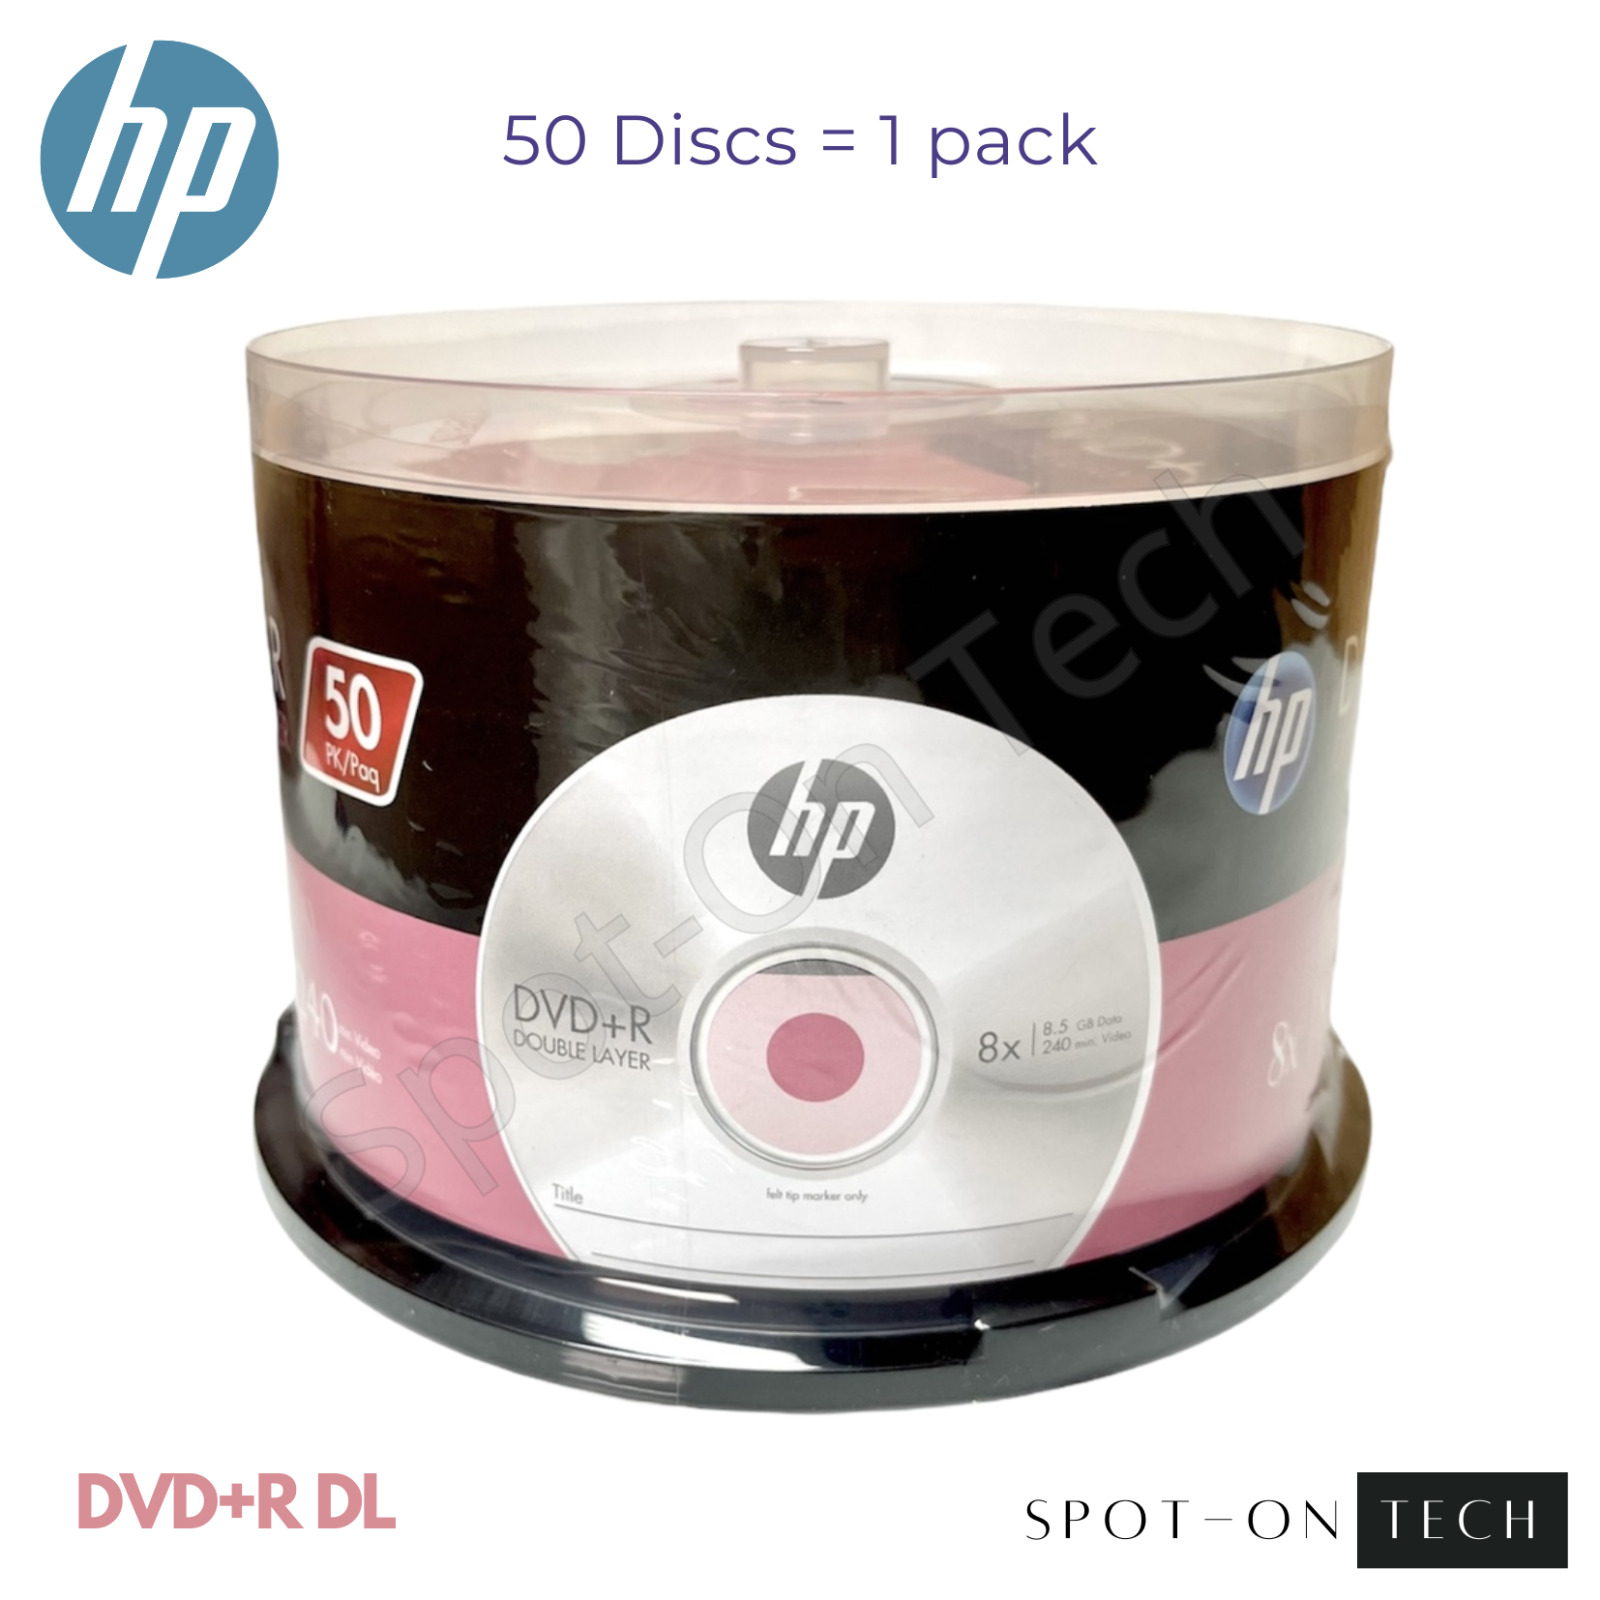 50 HP DVD DVD+R DL 8x Dual Double Layer Logo 8.5GB  - Same Day Ship